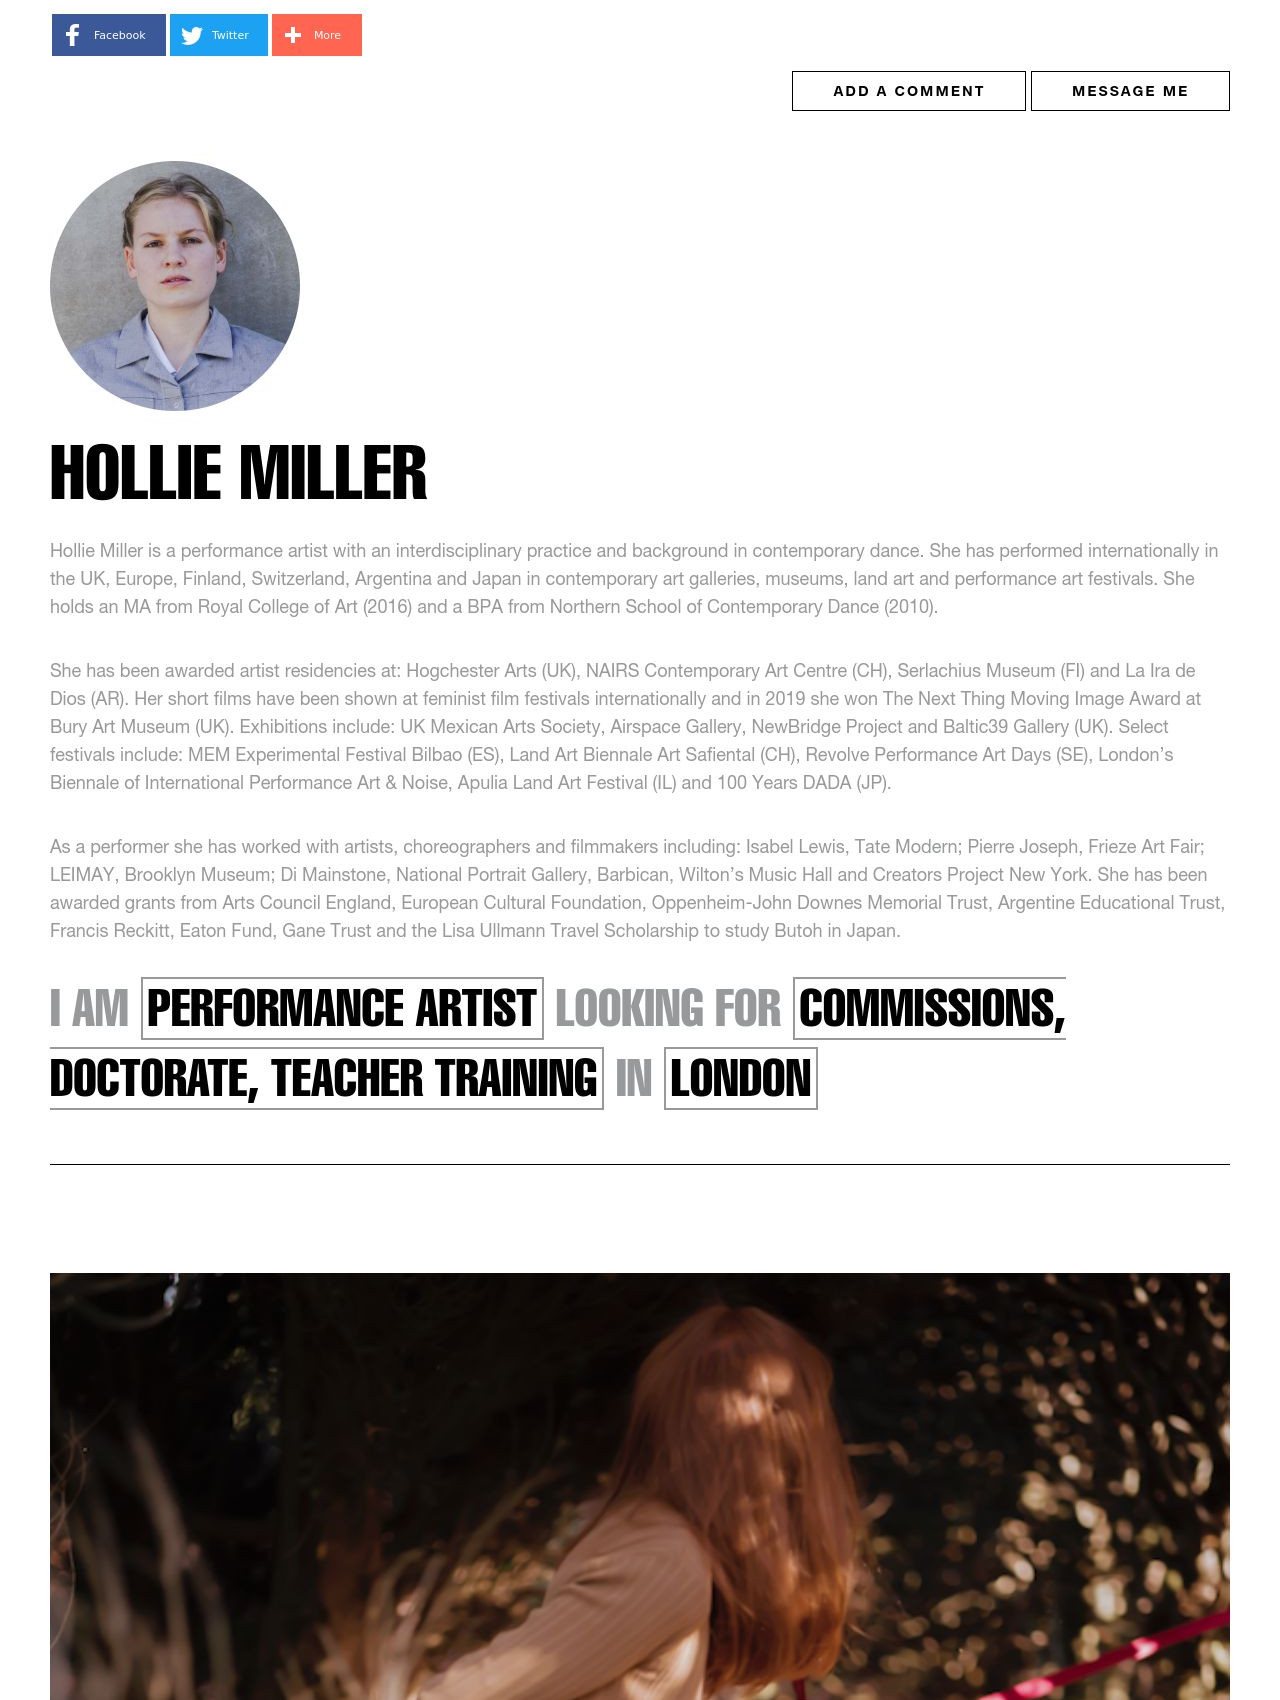 Hollie Miller